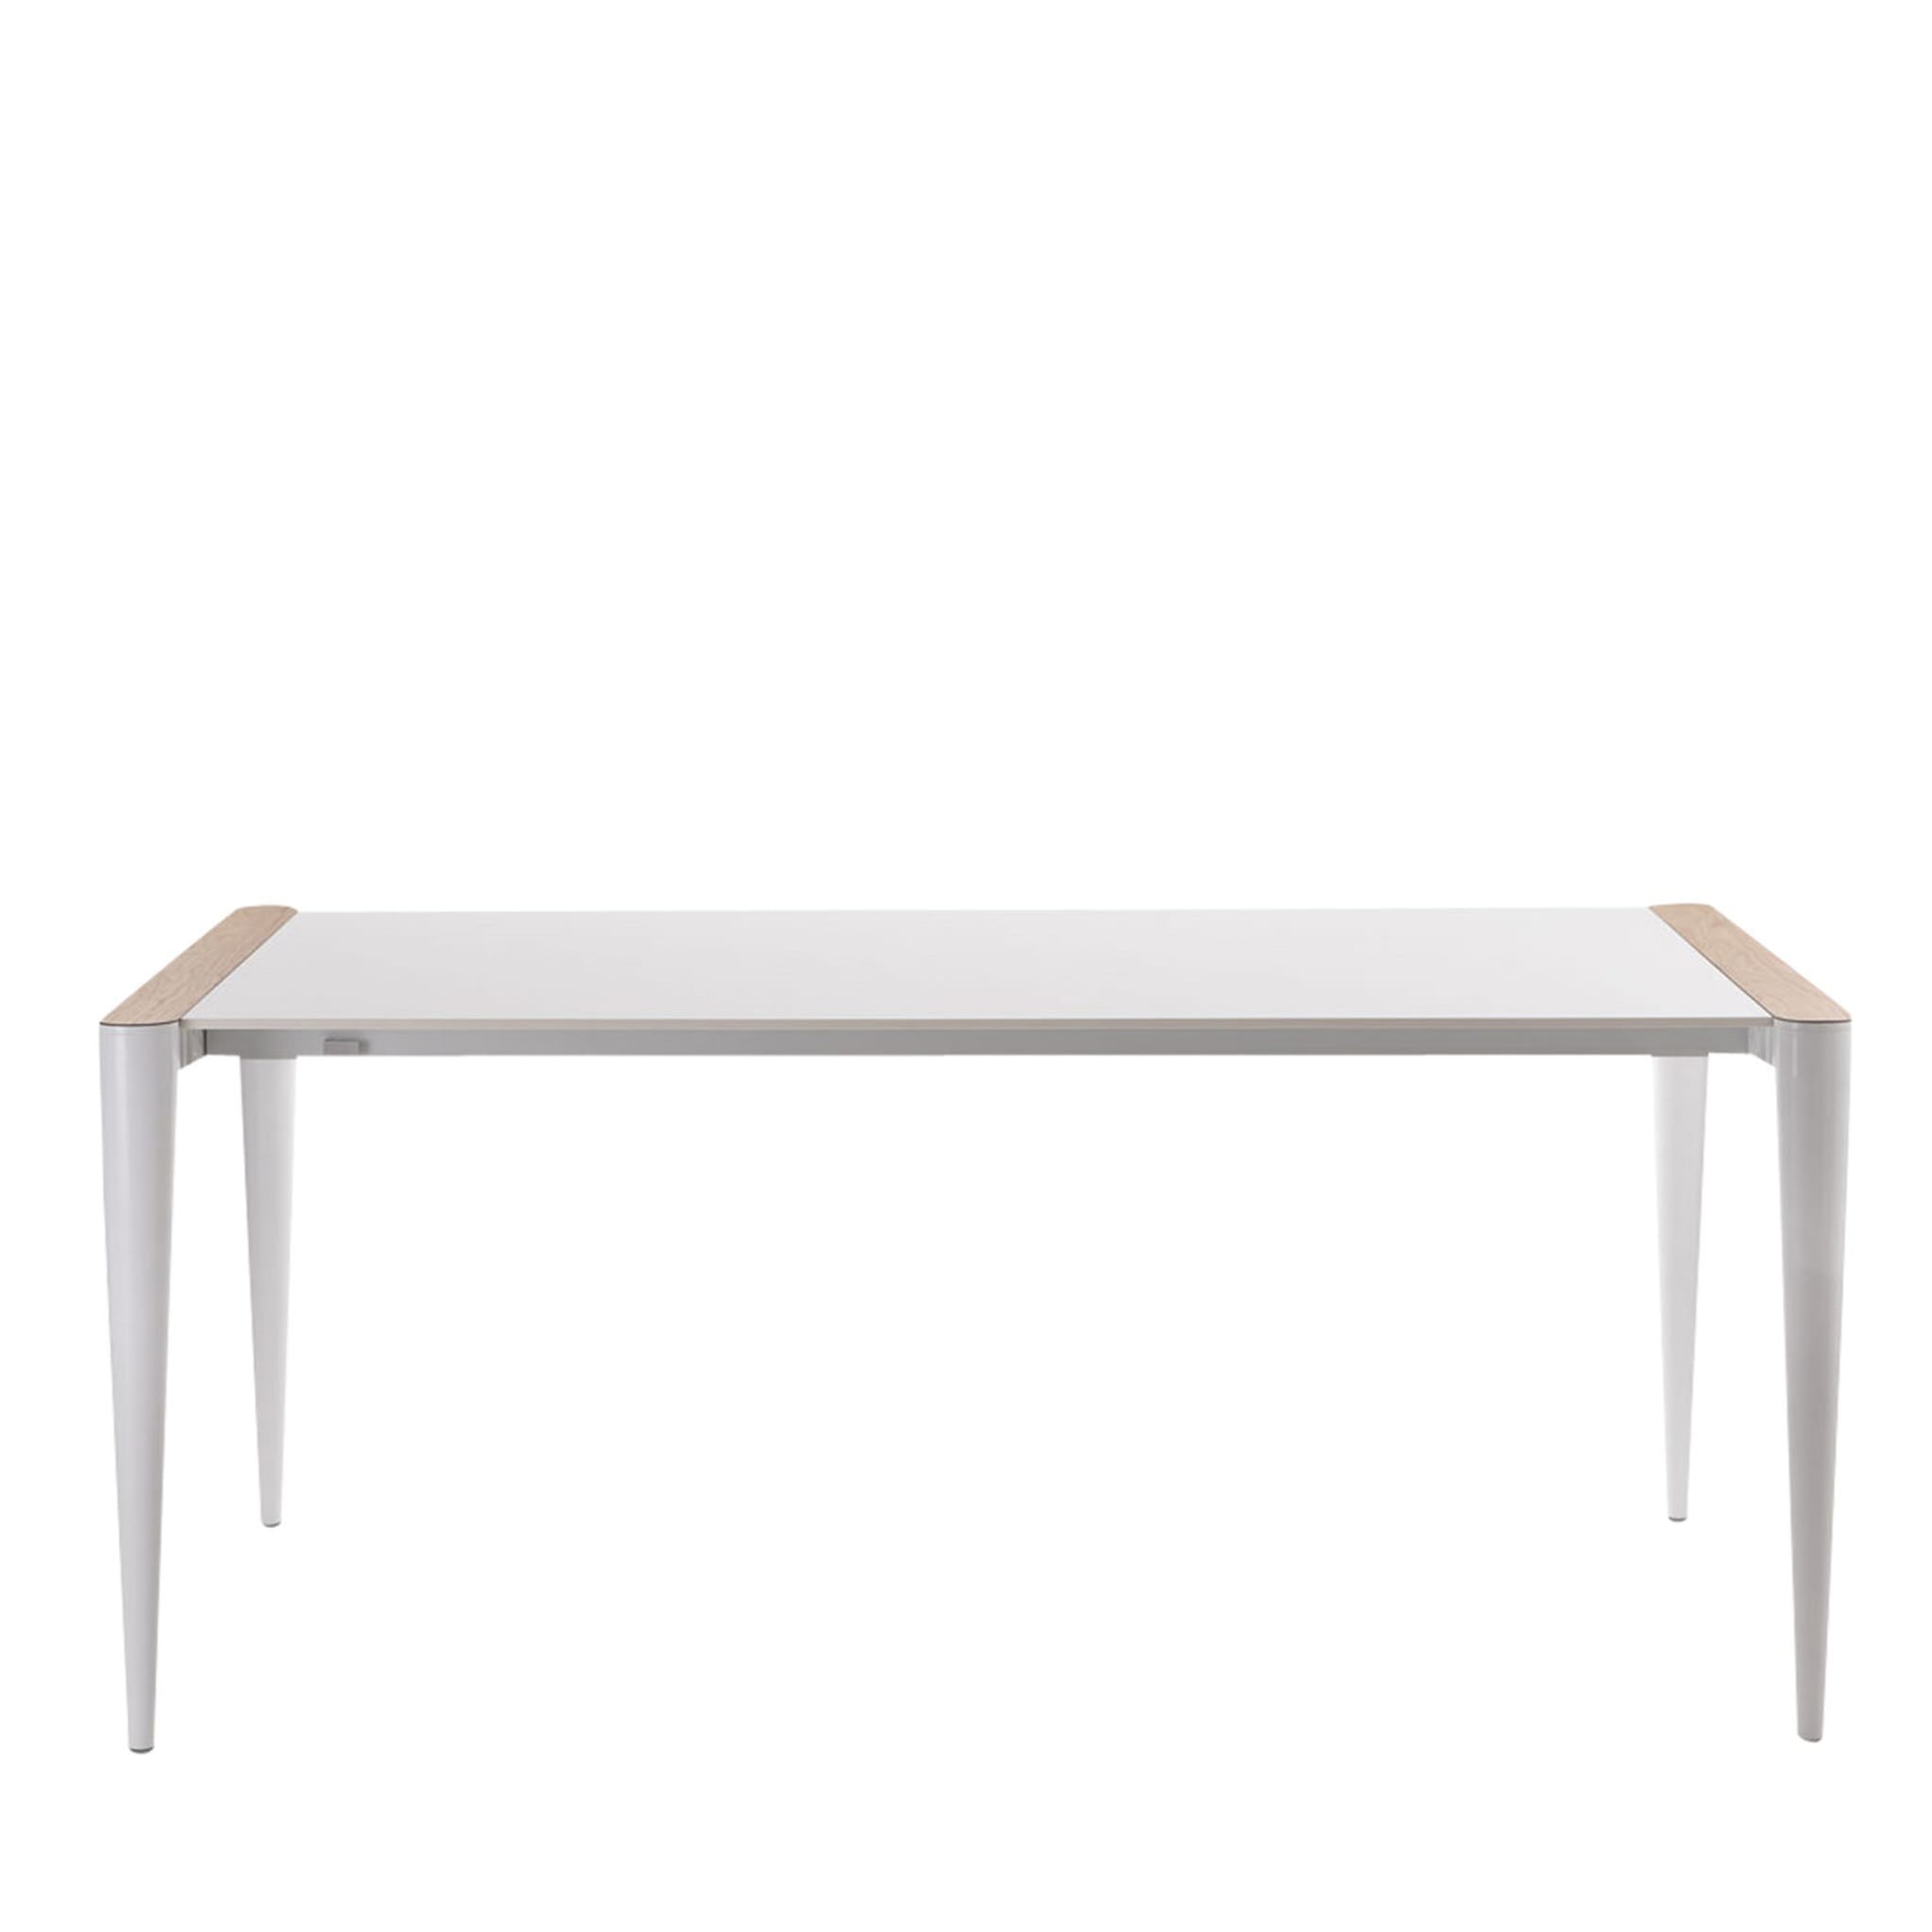 Bolero White Extendable Table by Renato Zamberlan - Main view